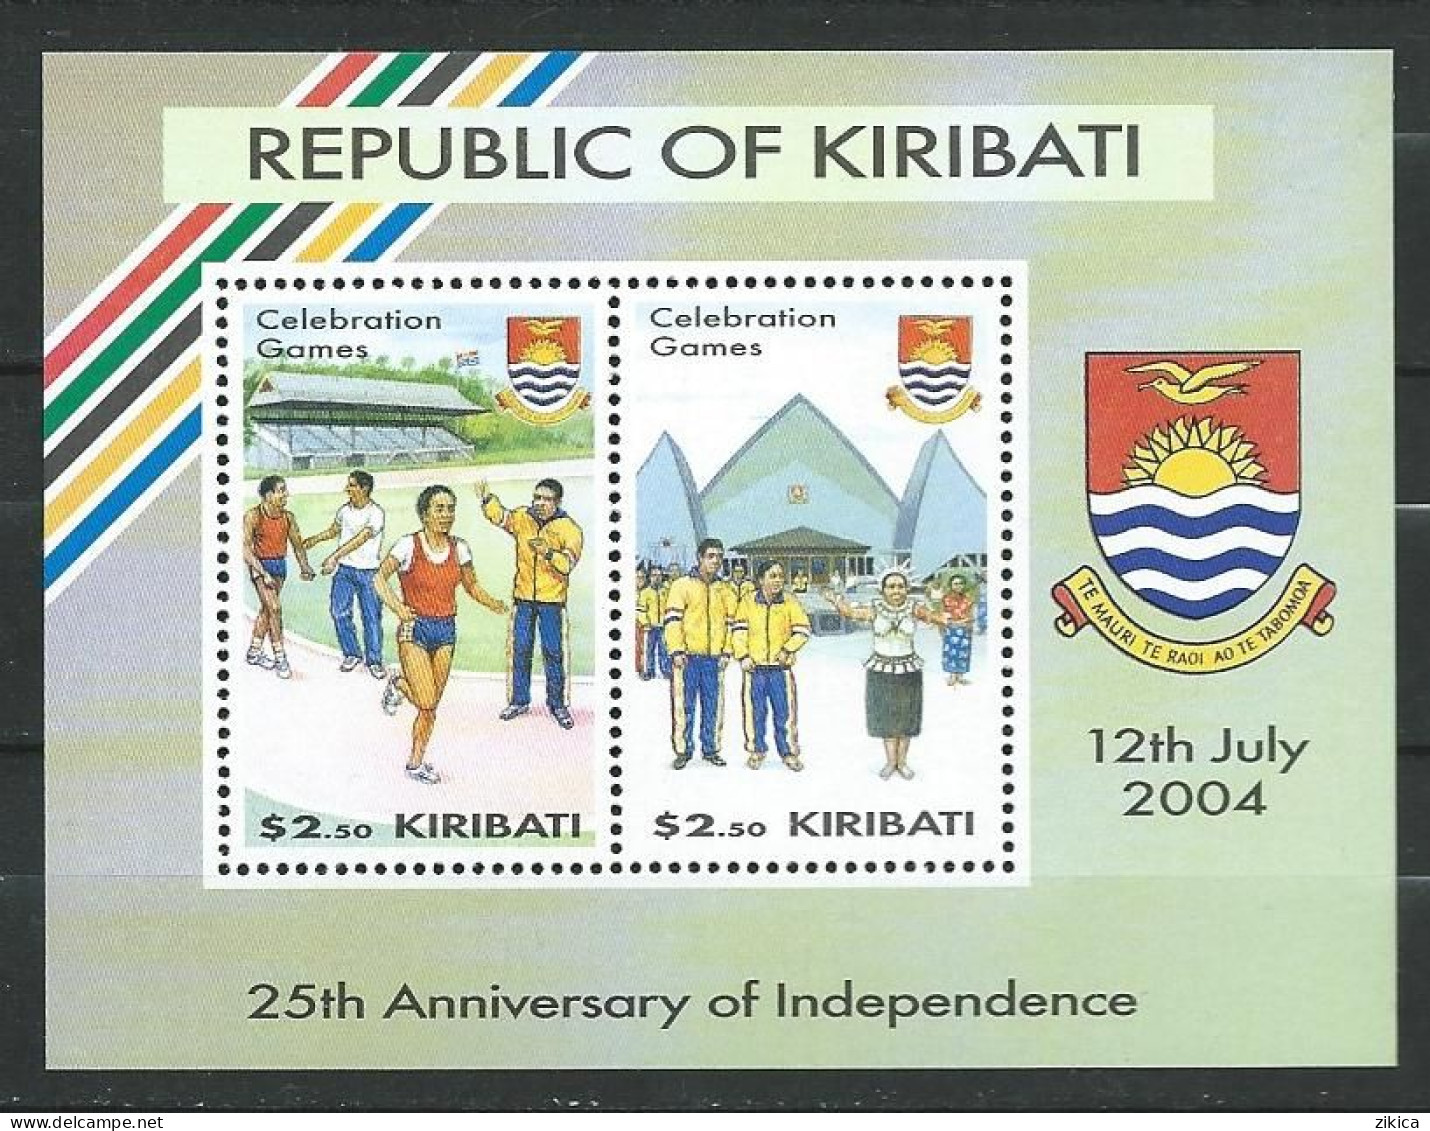 Kiribati - 2004 The 25th Anniversary Of Independence.S/S.Coat Of Arms. MNH** - Kiribati (1979-...)